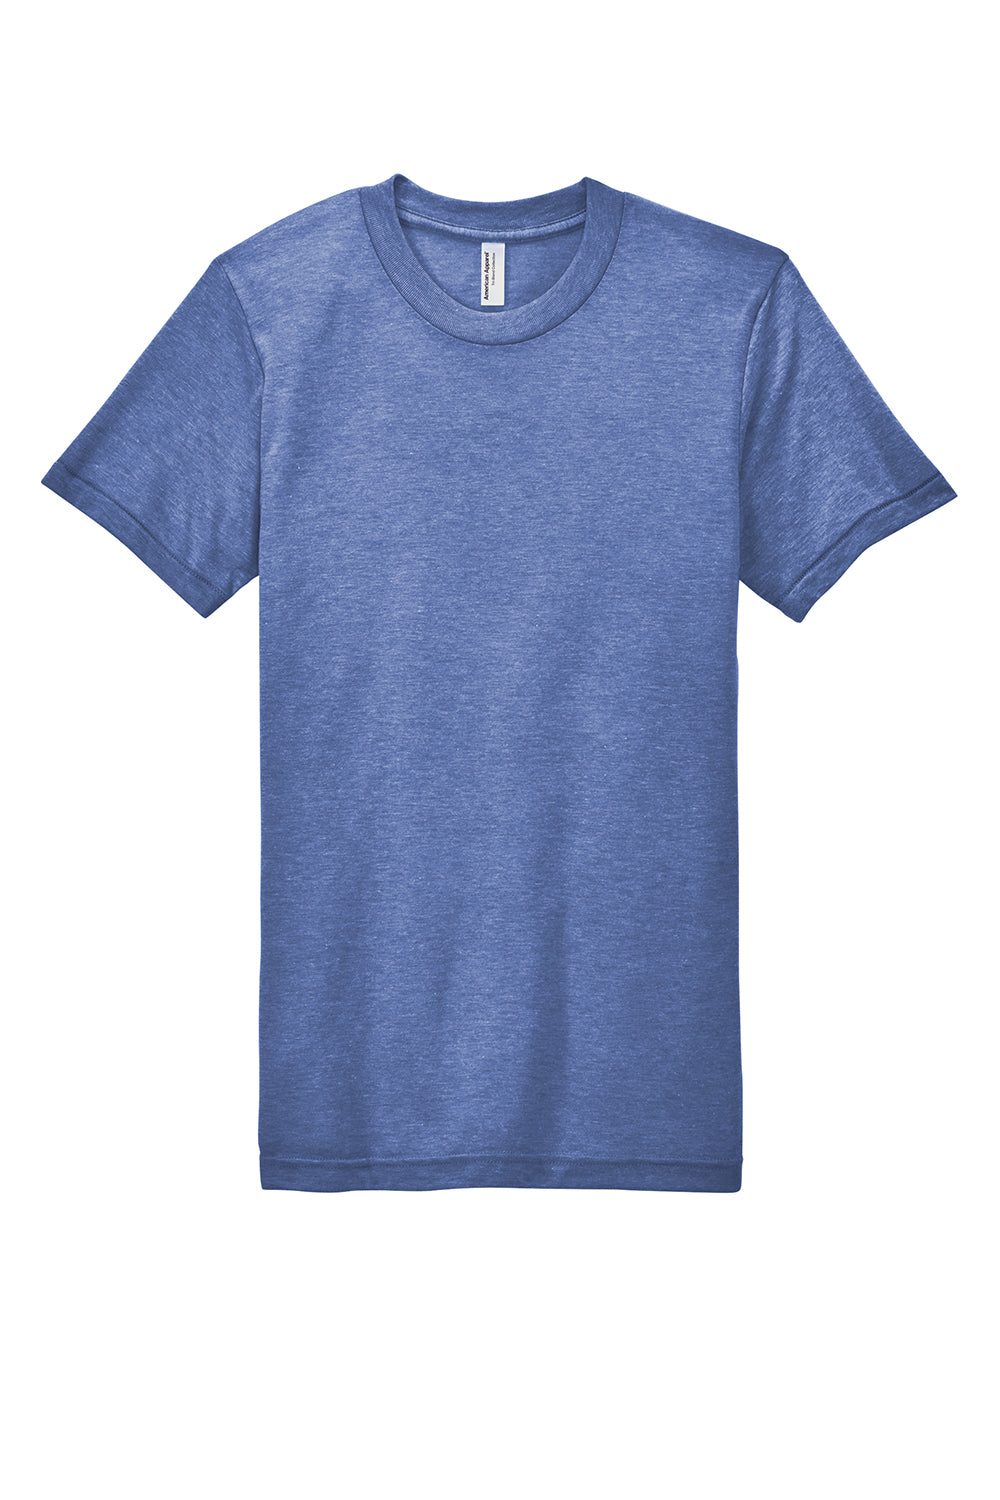 American Apparel TR401 Mens Track Short Sleeve Crewneck T-Shirt Athletic Blue Flat Front